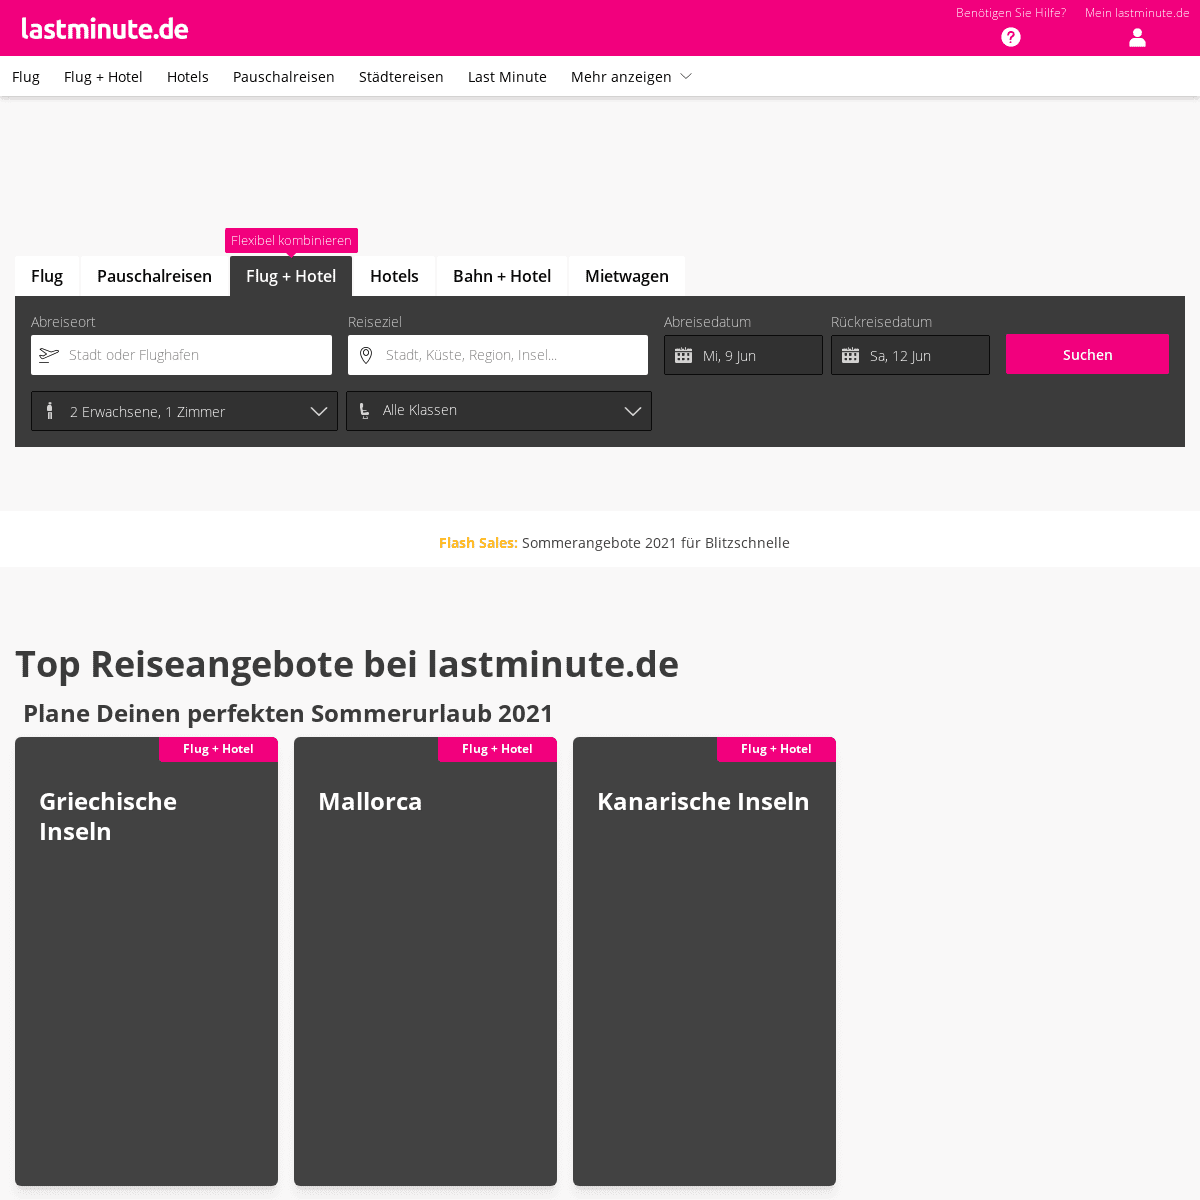 A complete backup of https://lastminute.de